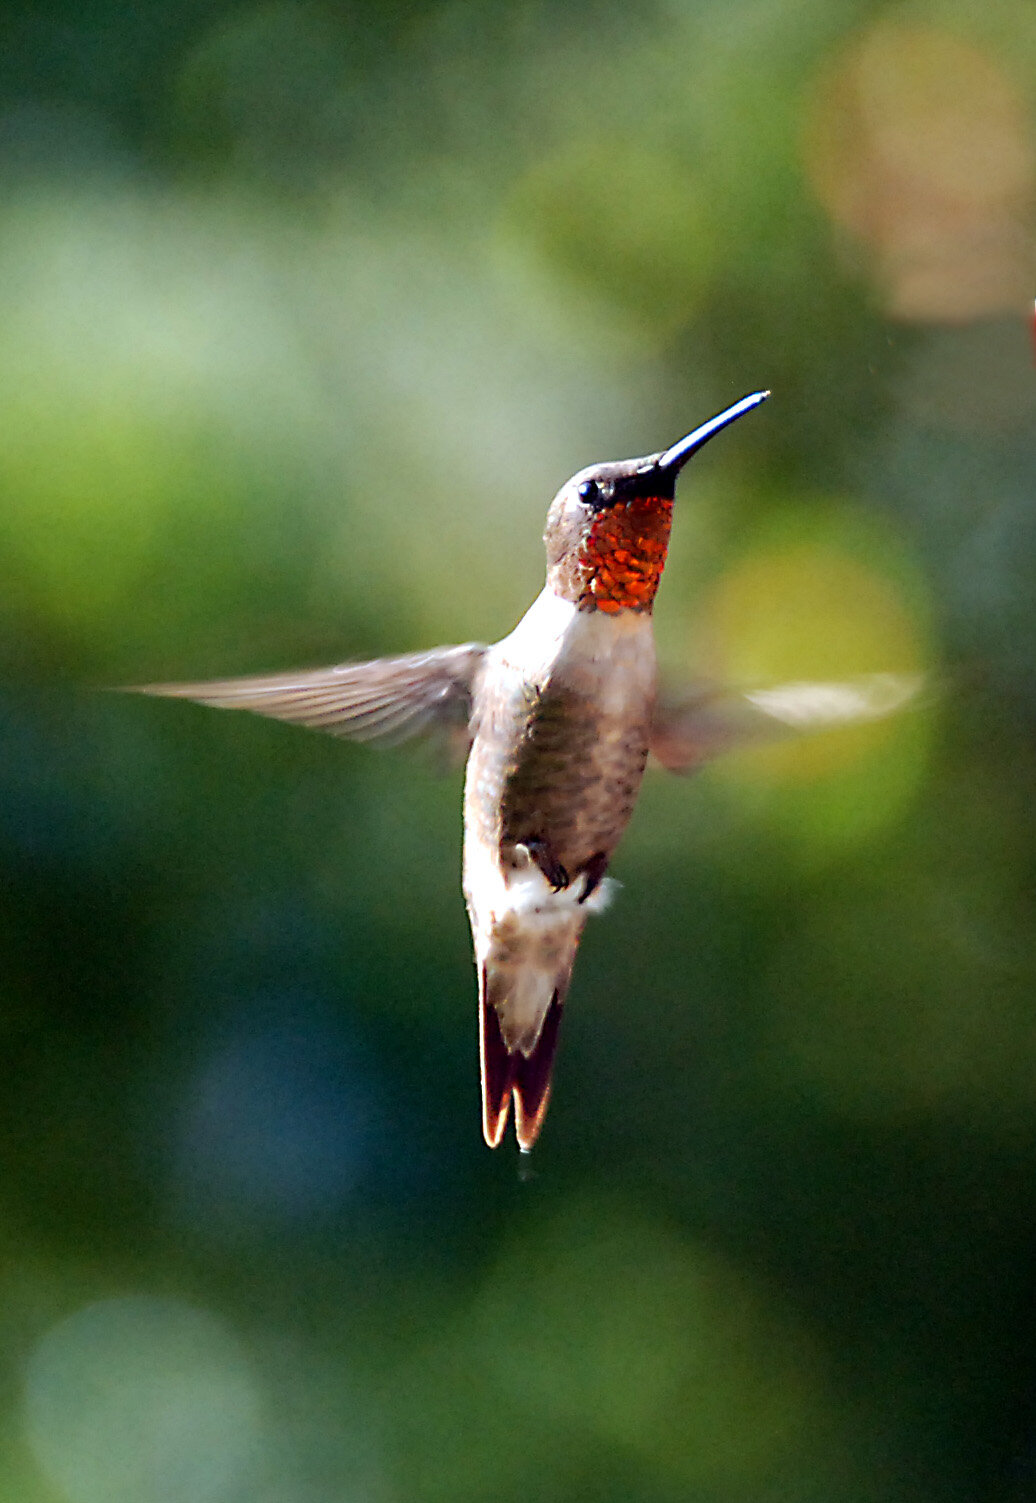 Ruby-throated hummingbird photo by Carol Foil (Copy)